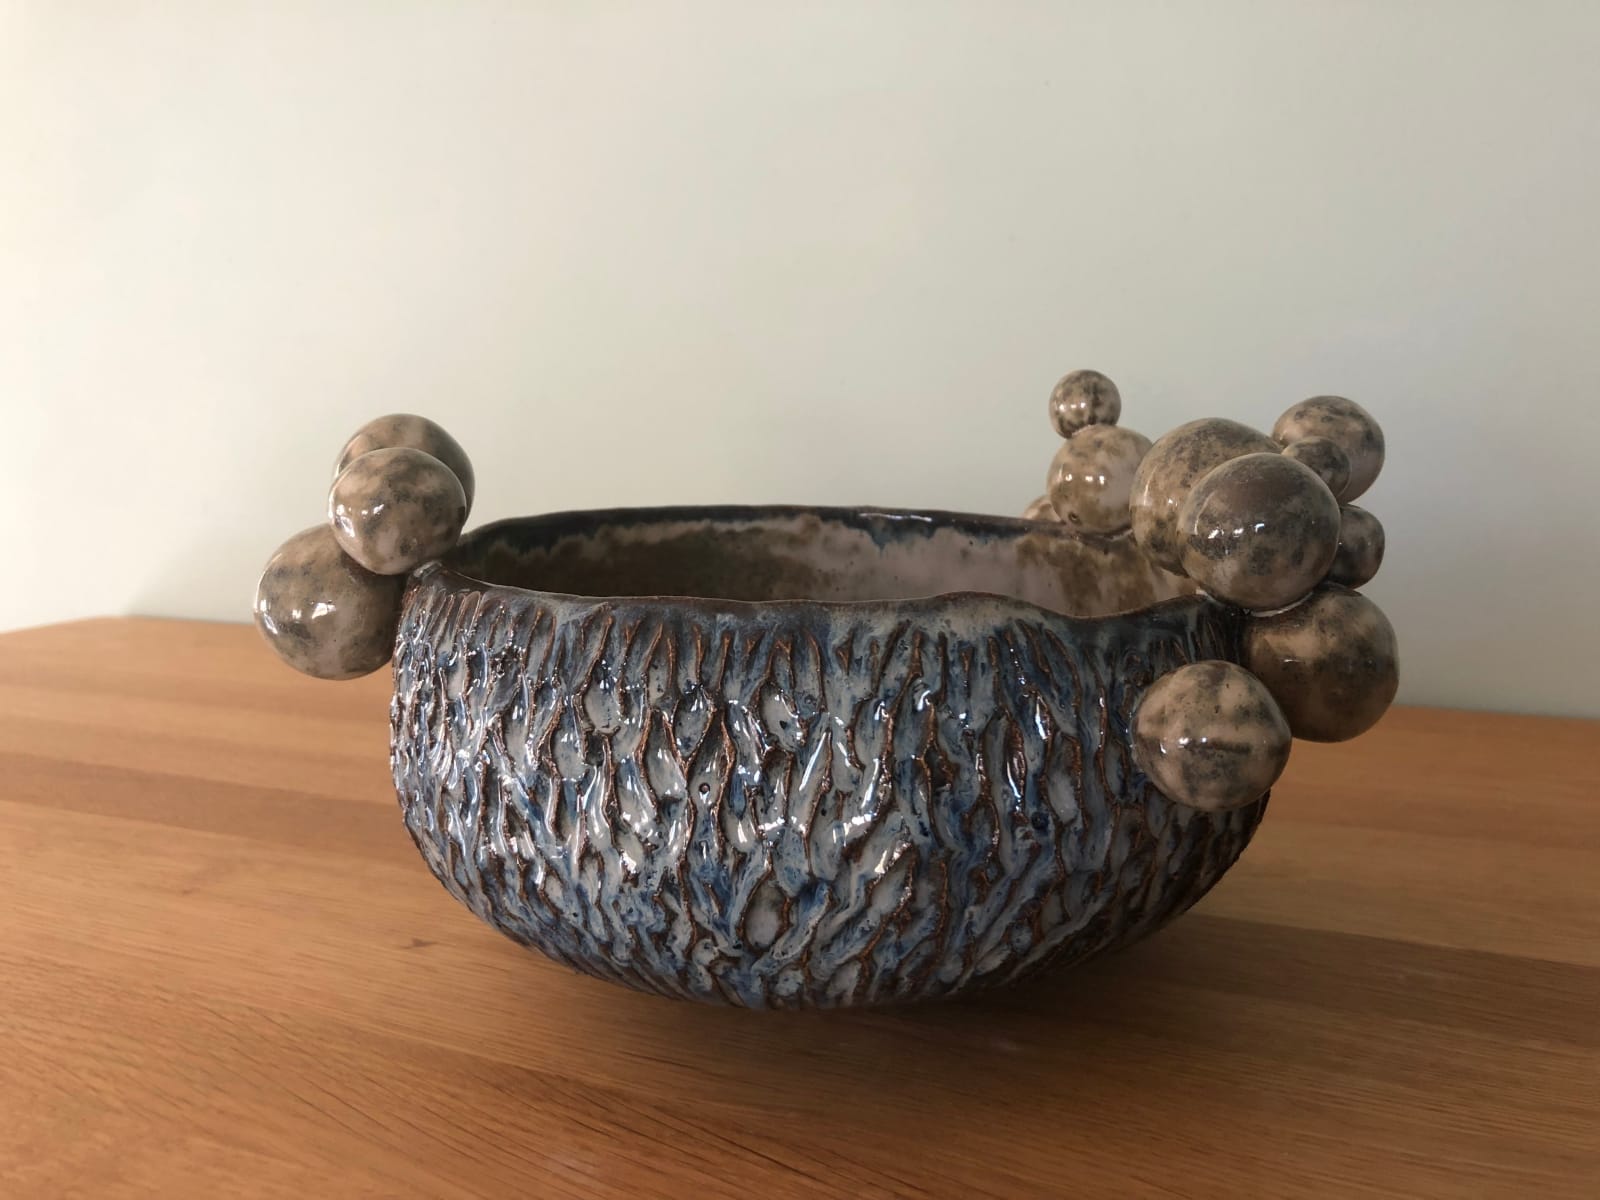 Lois Carson, Carved bowl & balls